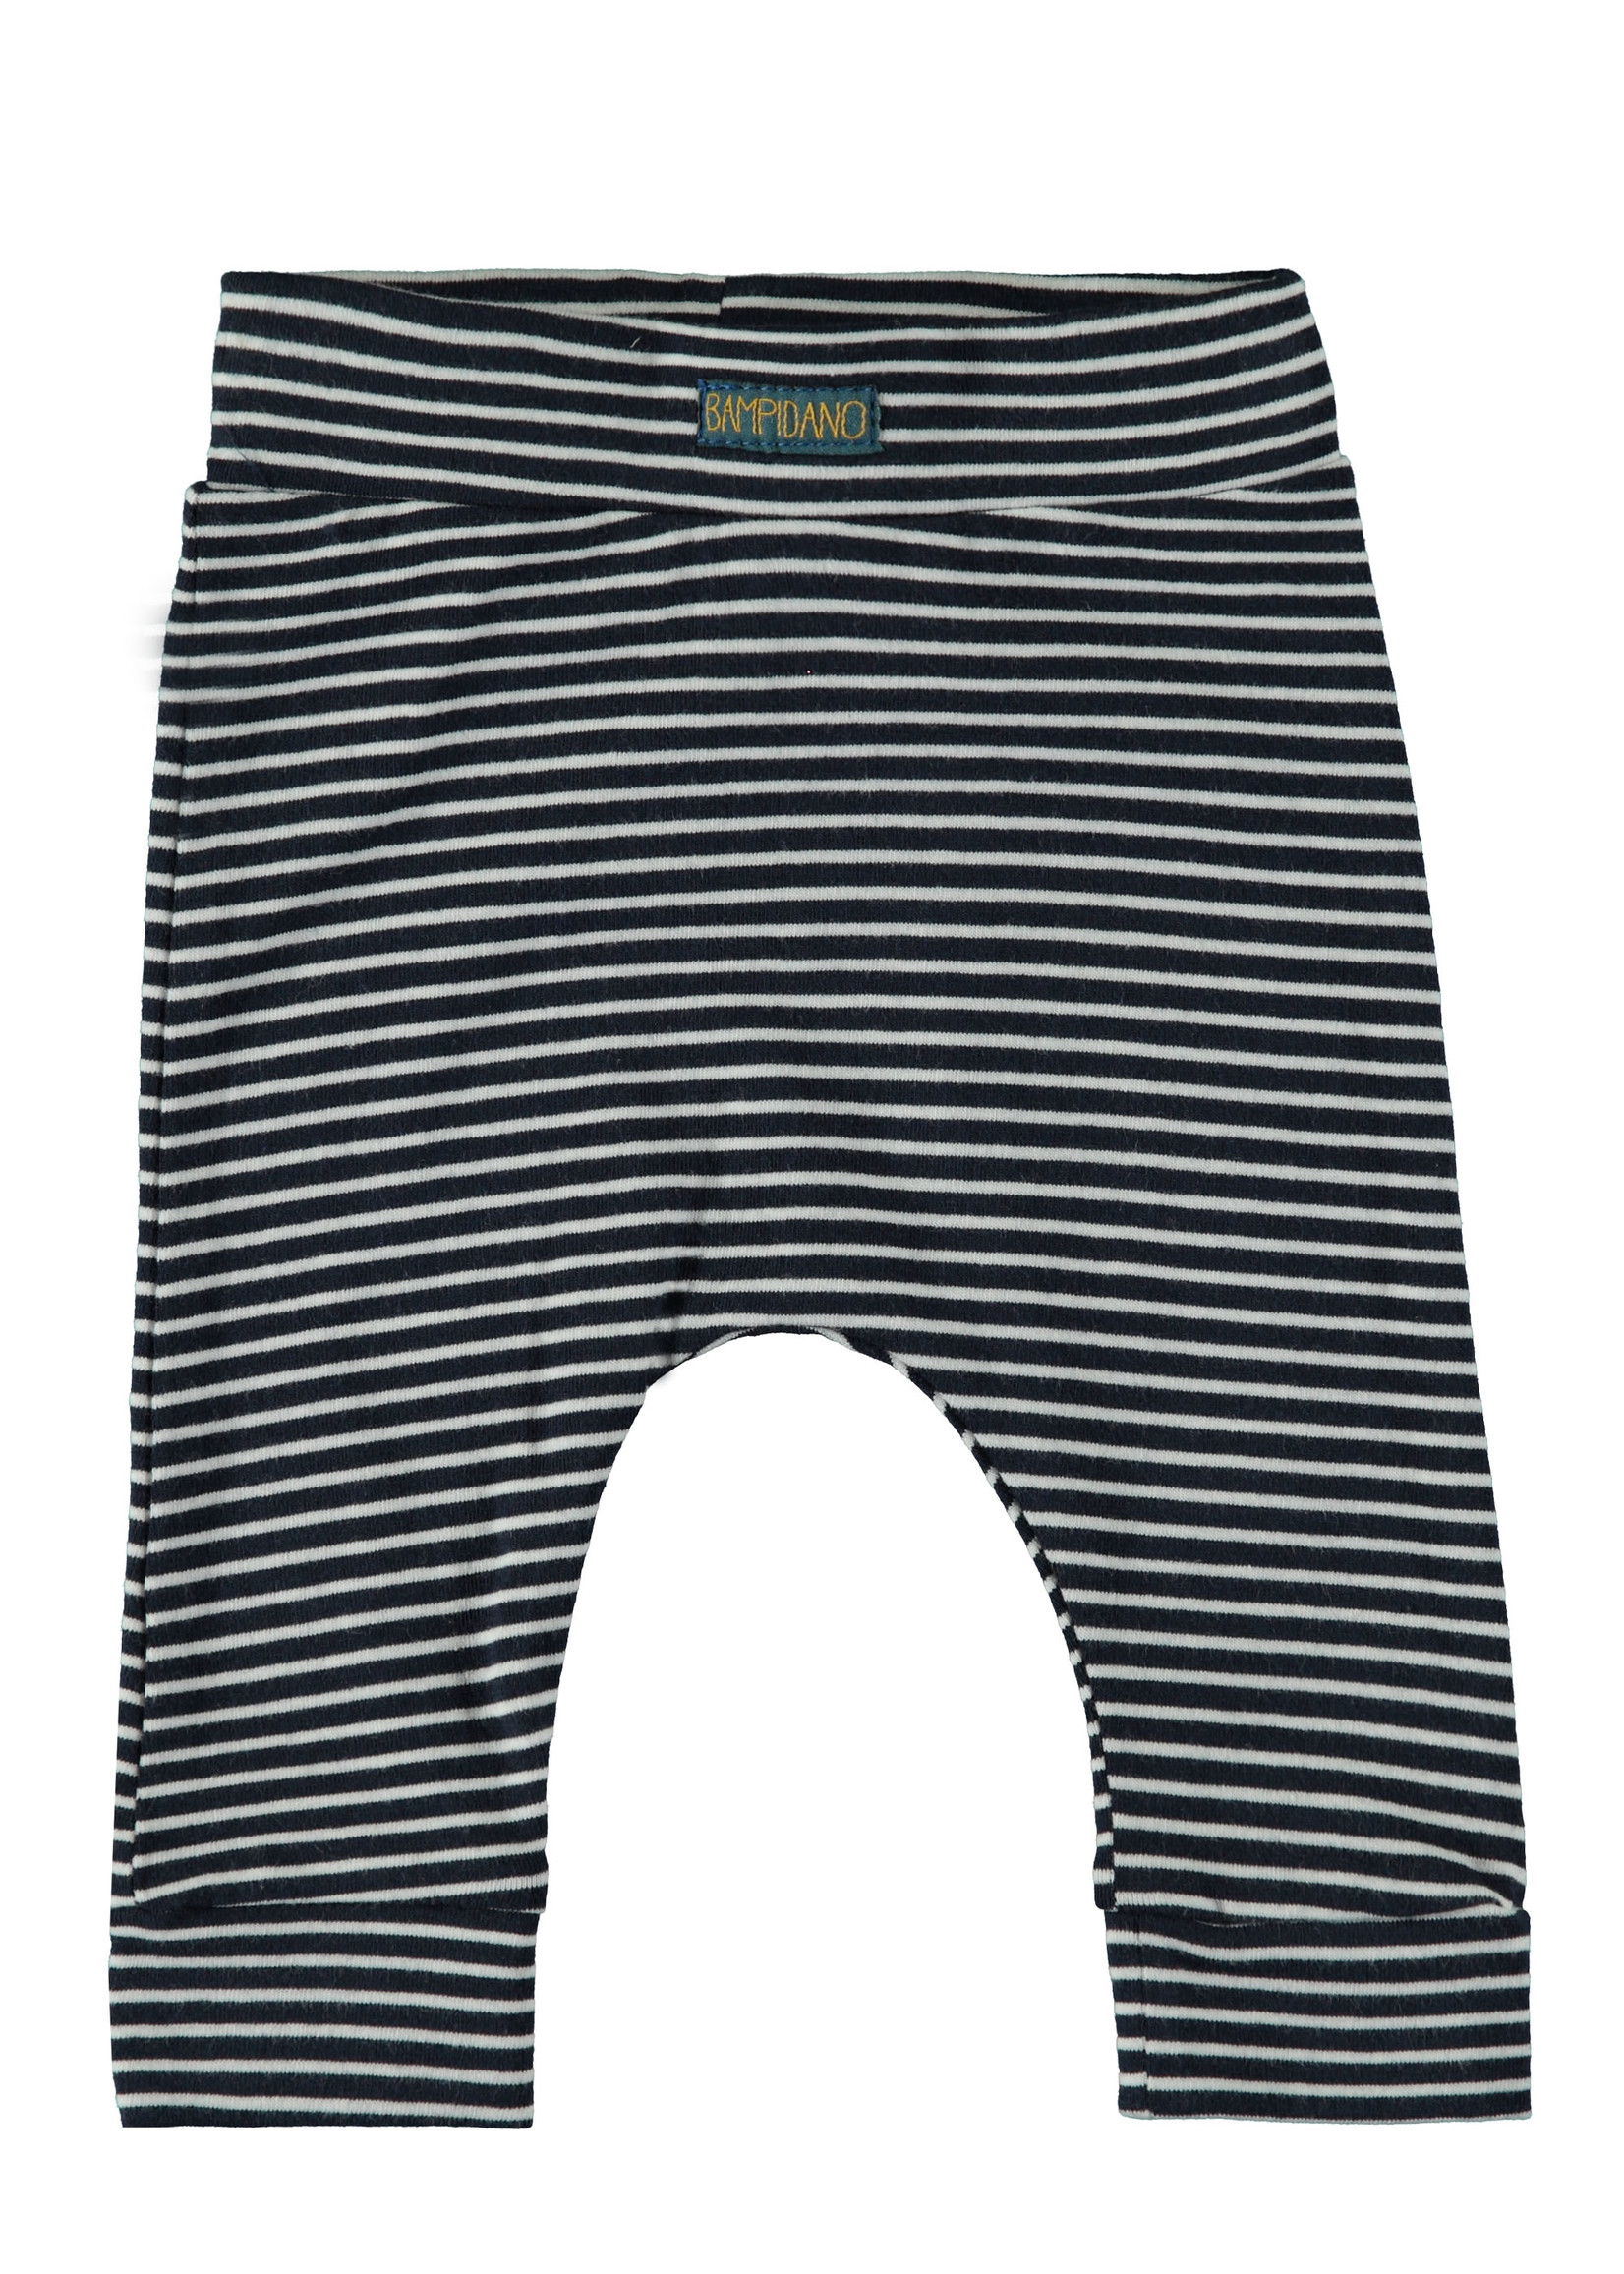 Little Bampidano New Born fitted trousers Ayden plain/yd str, stripe navy